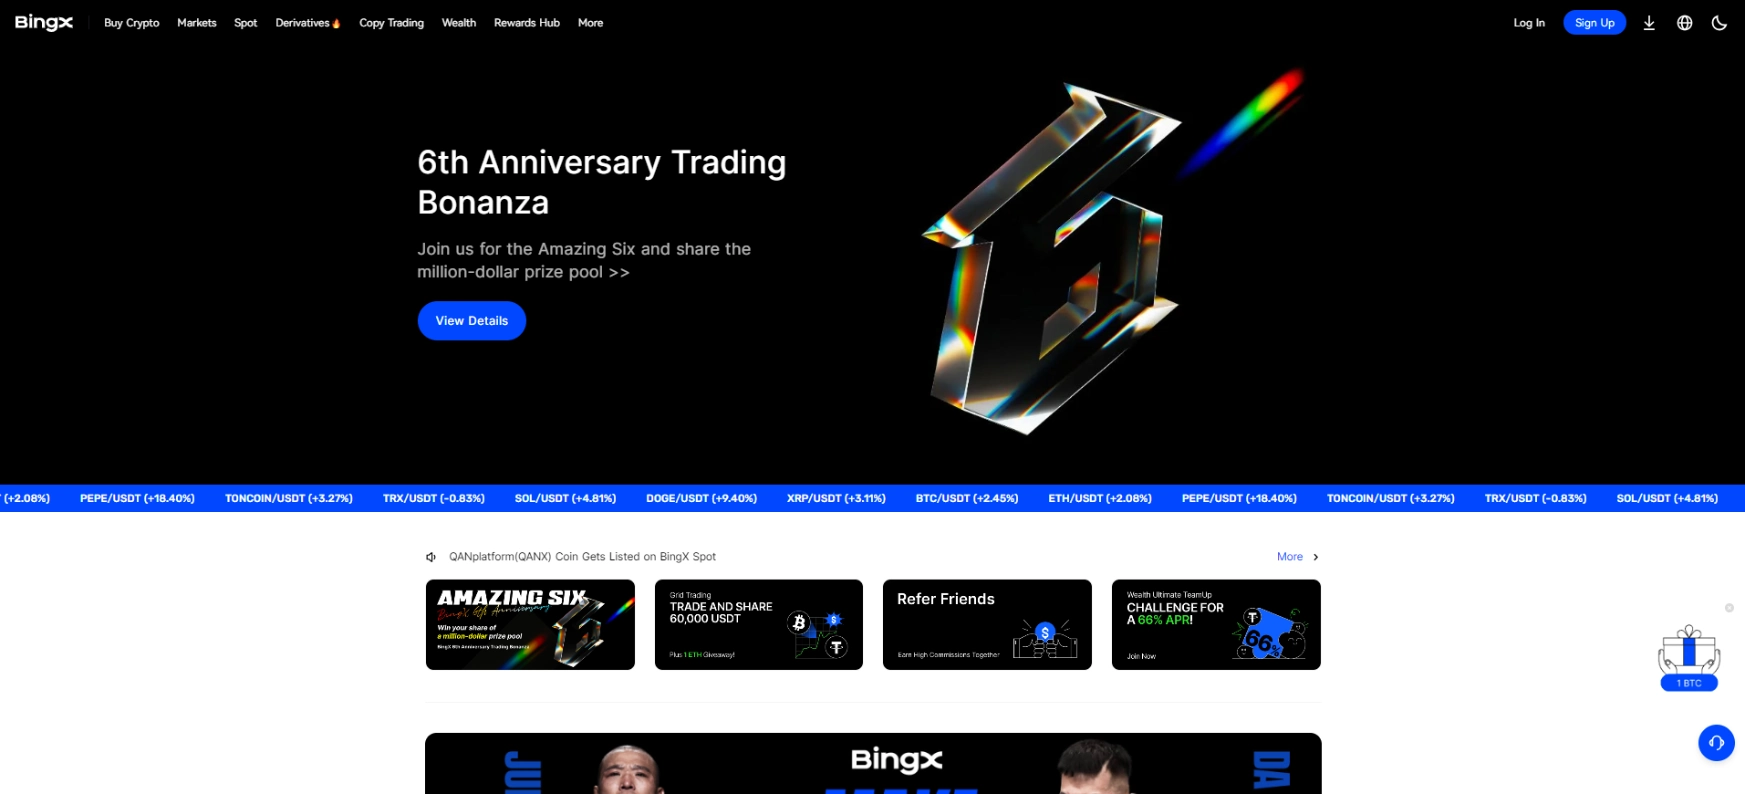 Bingx's Trading Products